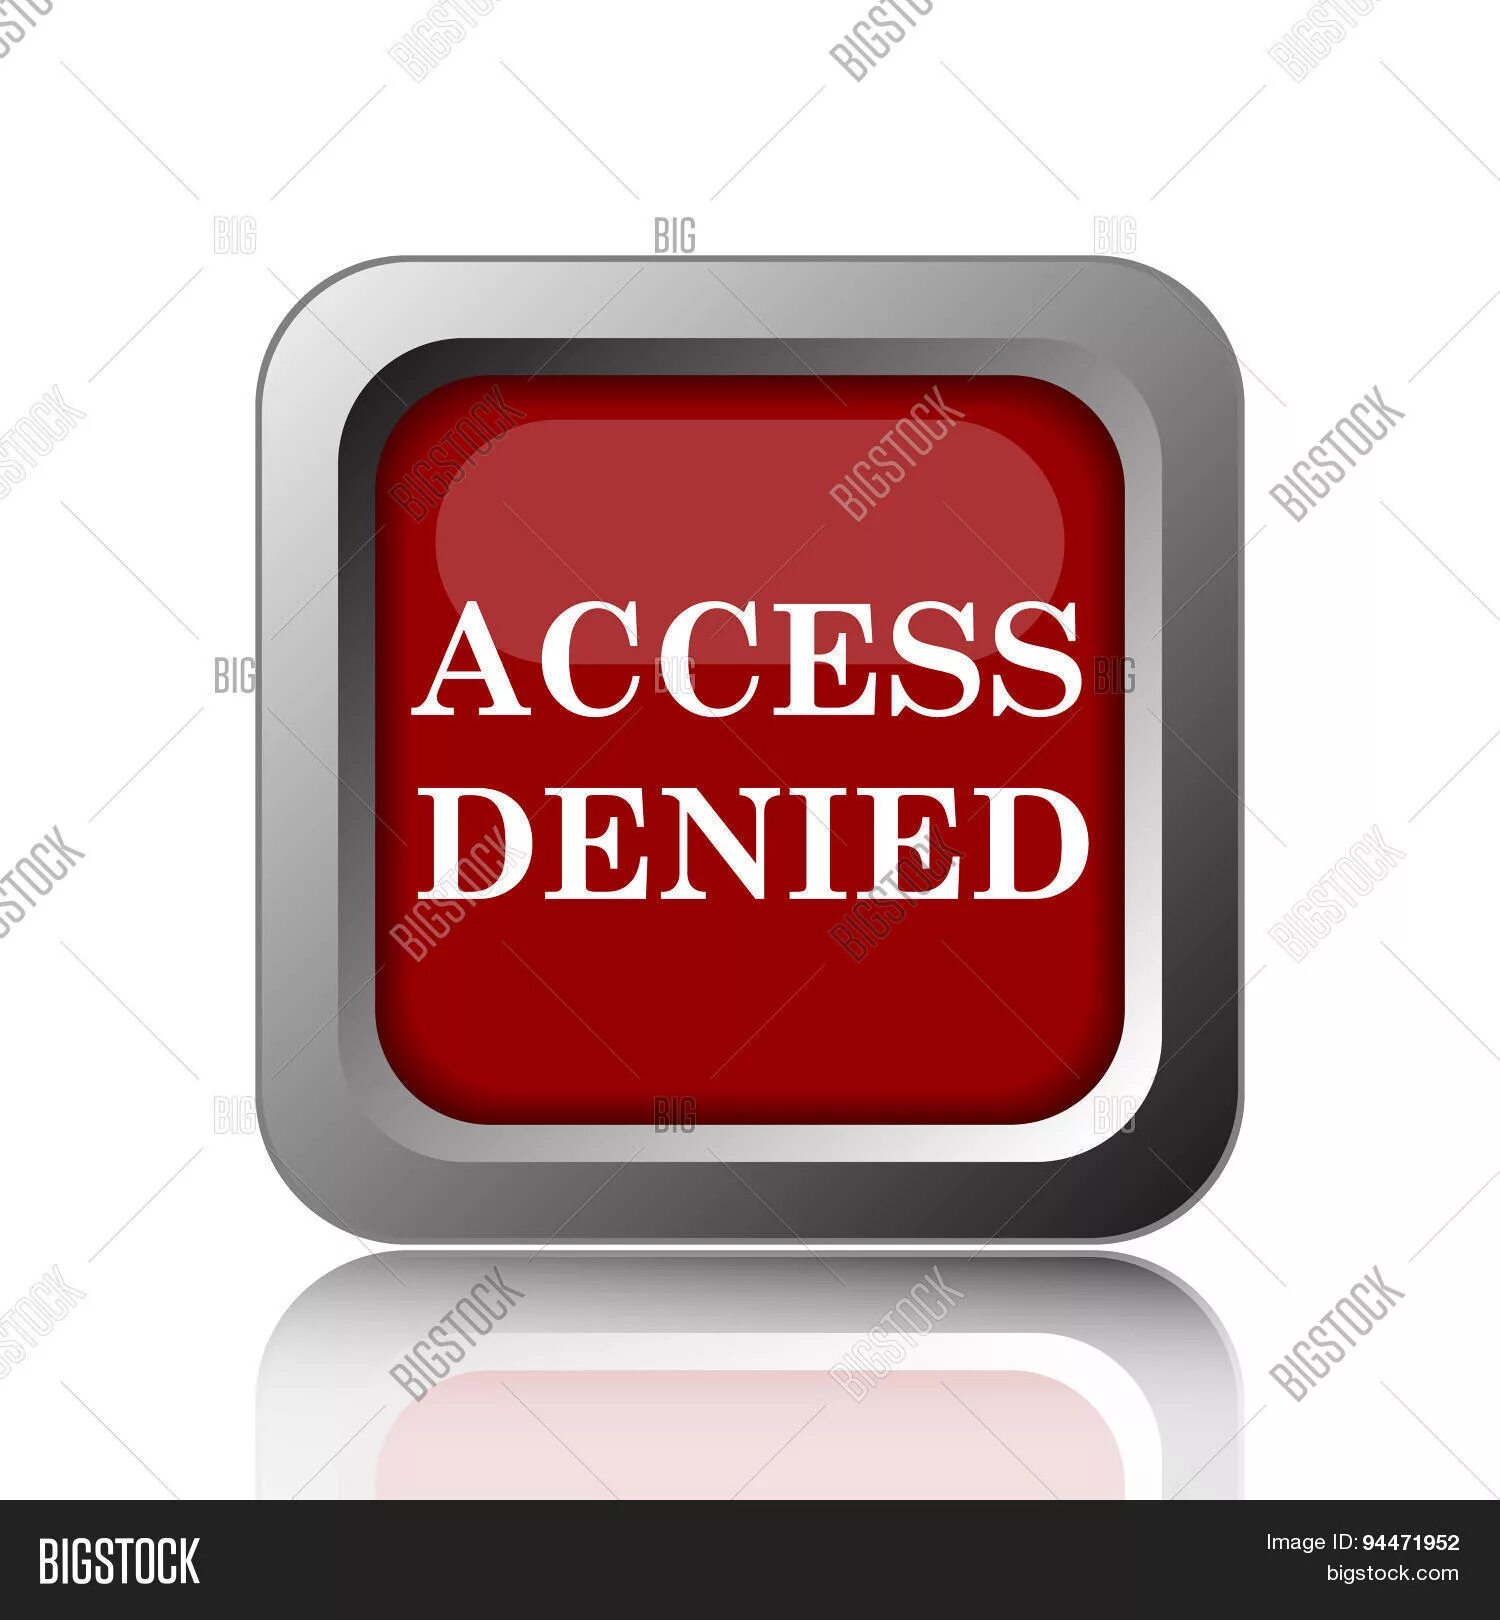 Message access denied. Access denied картинки. Access denied гиф. Access denied арт. Заставка на телефон access denied.